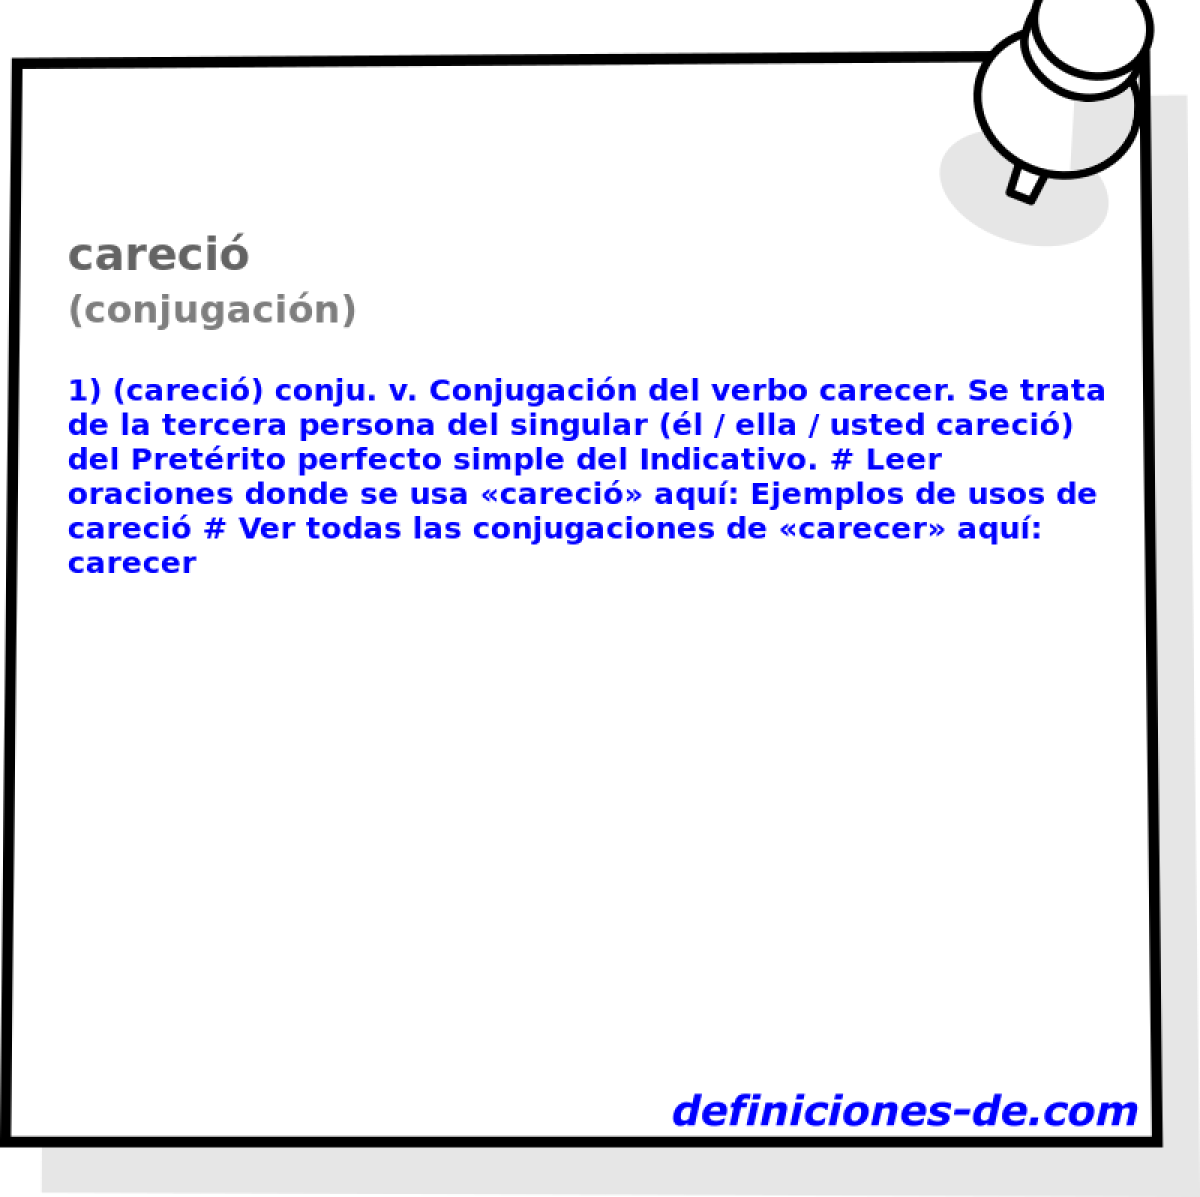 careci (conjugacin)